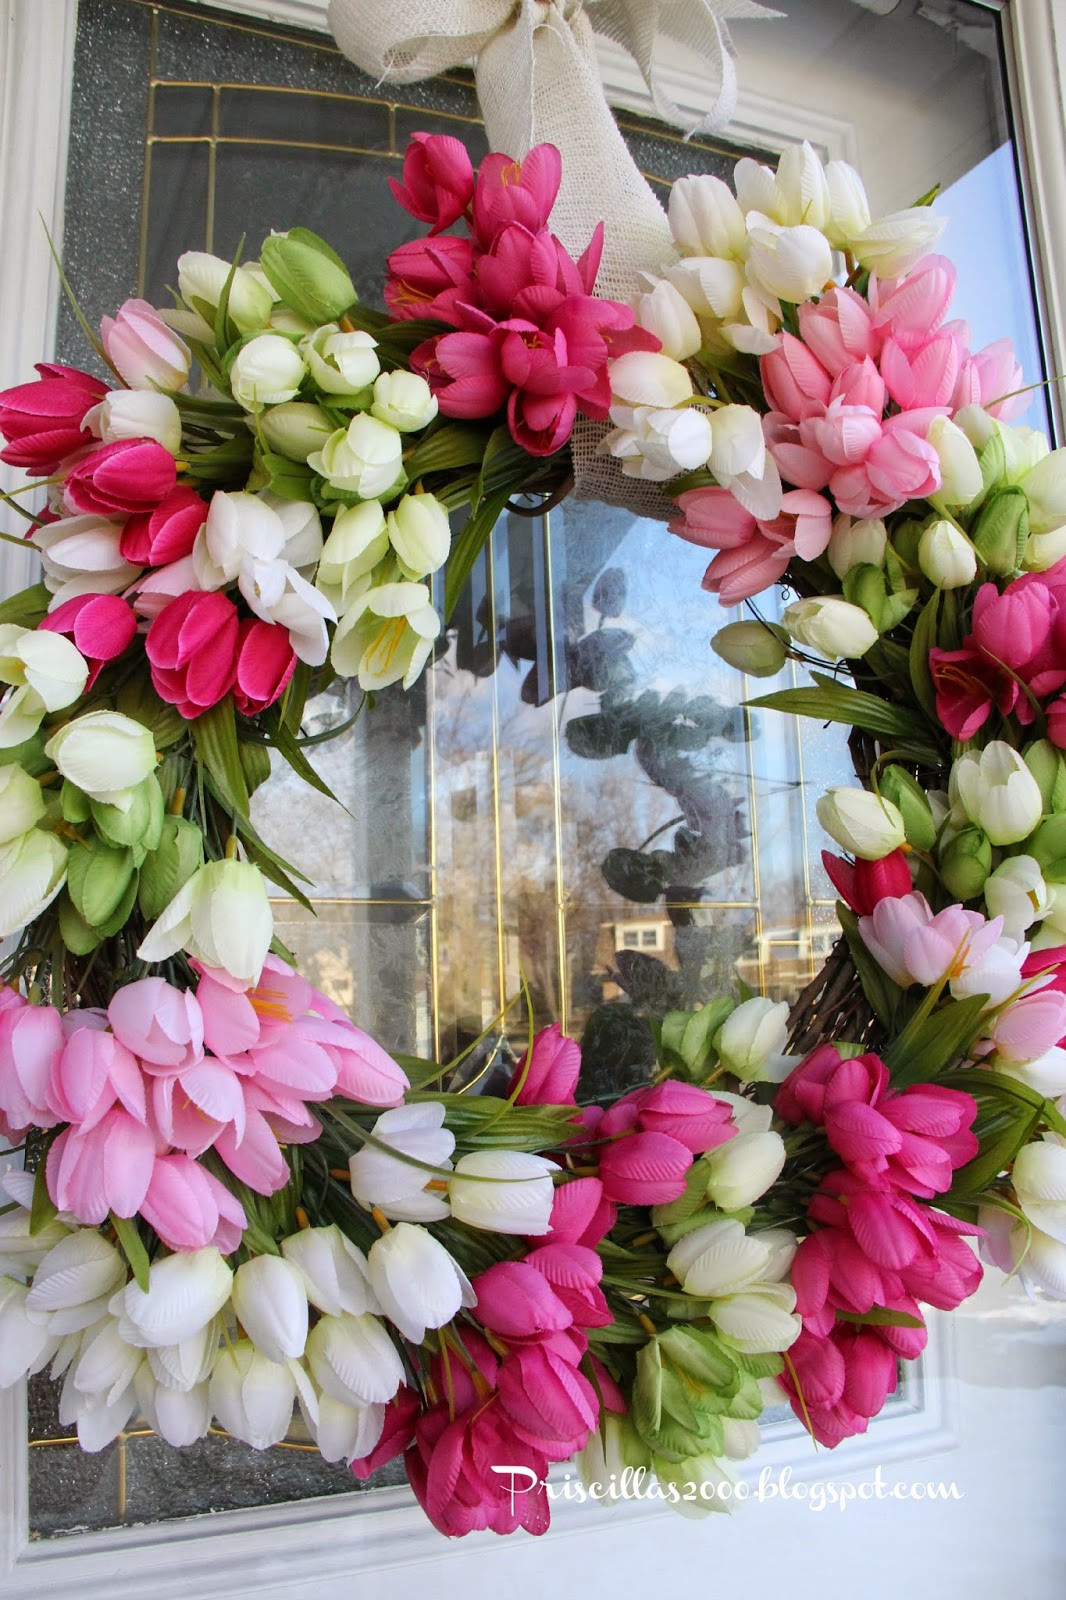 Best ideas about Spring Wreath DIY
. Save or Pin Priscillas DIY Spring Wreaths Now.